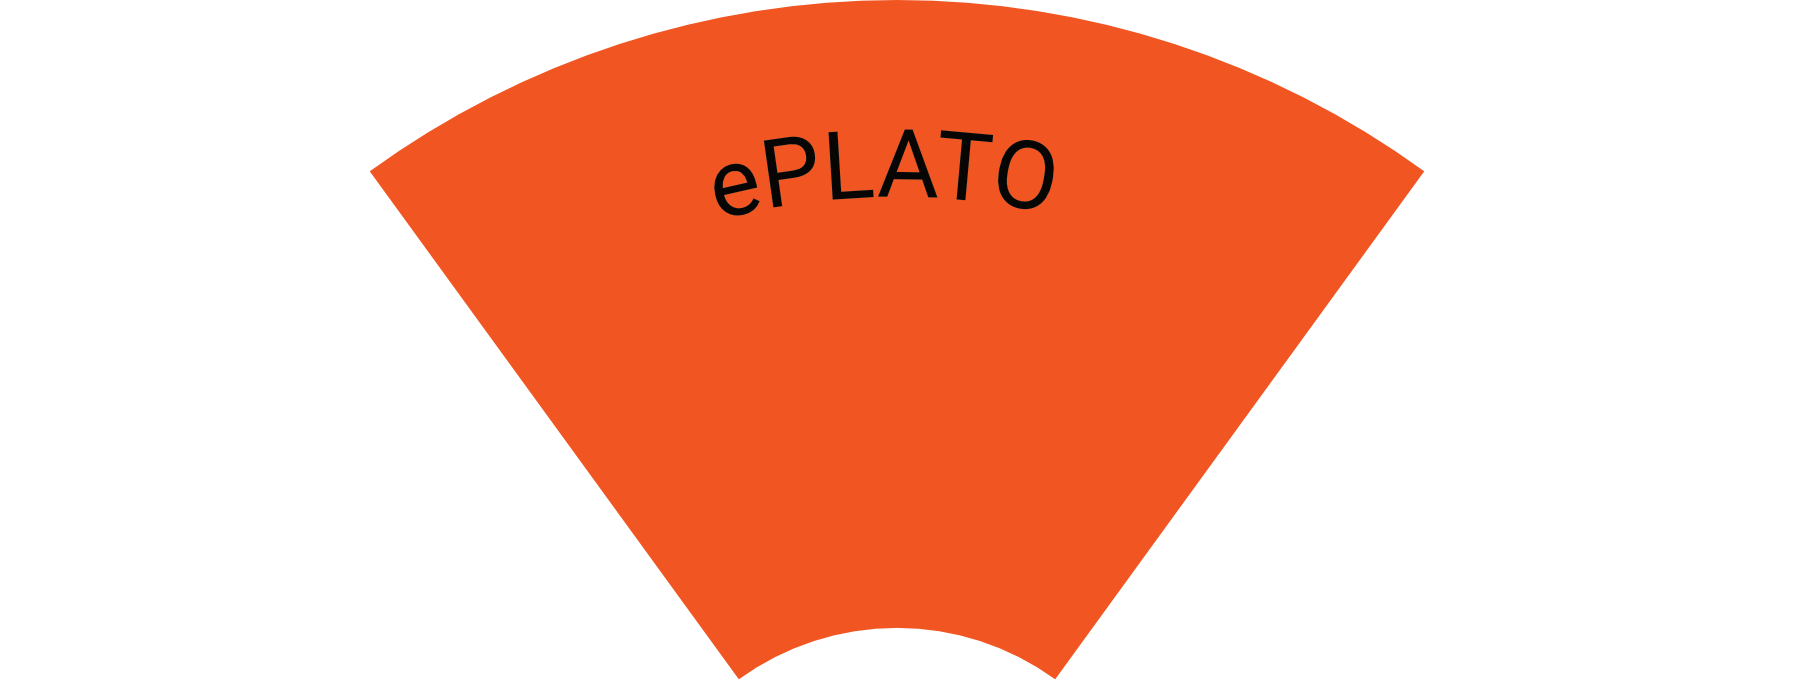 Eplato Diagramm